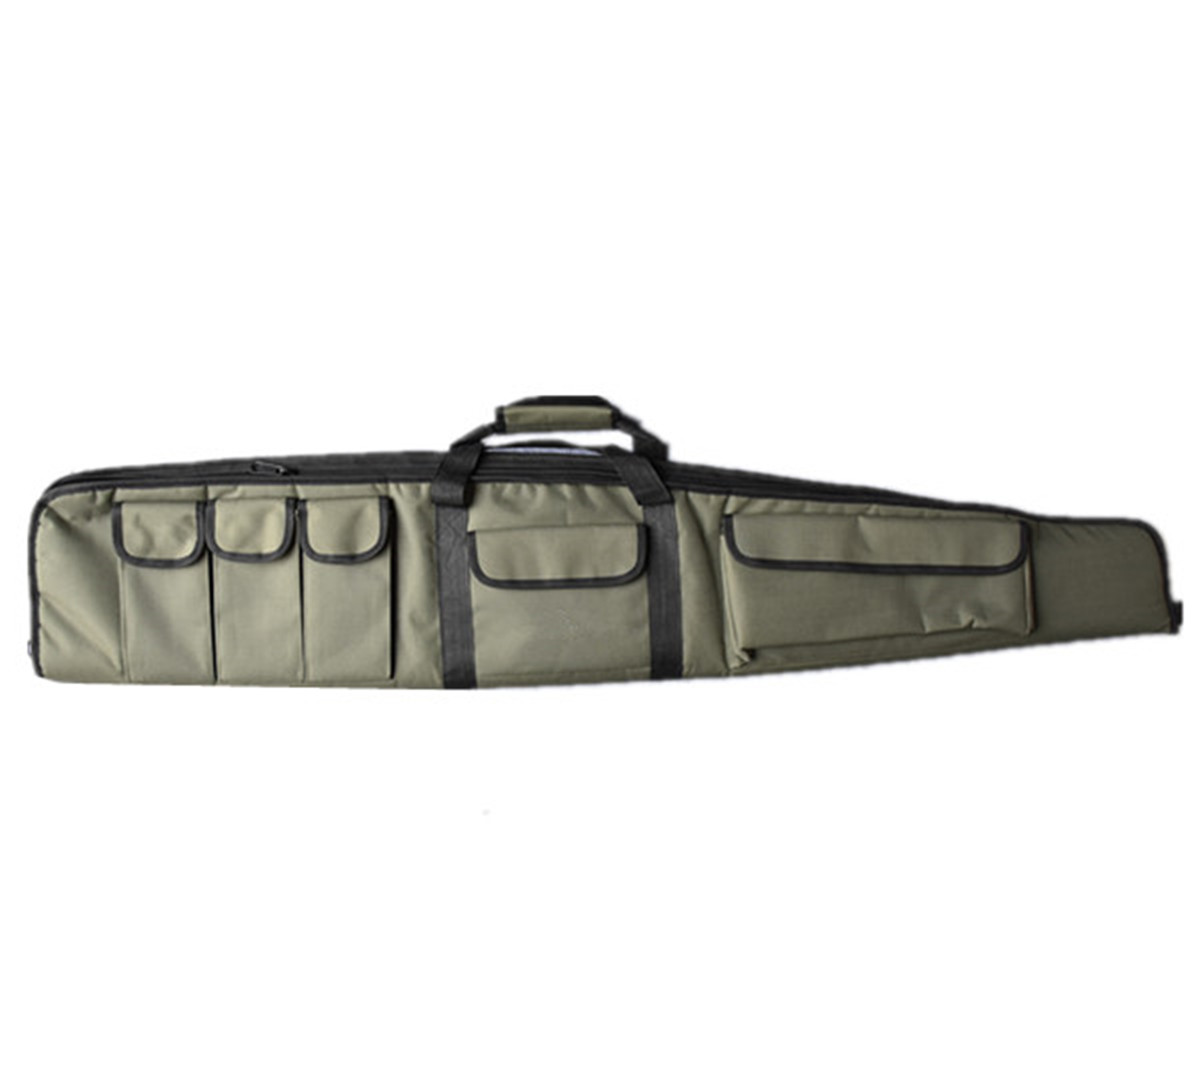 Hunting Double Gun Bag 52.5 inch length CORDURA Nylon fabric